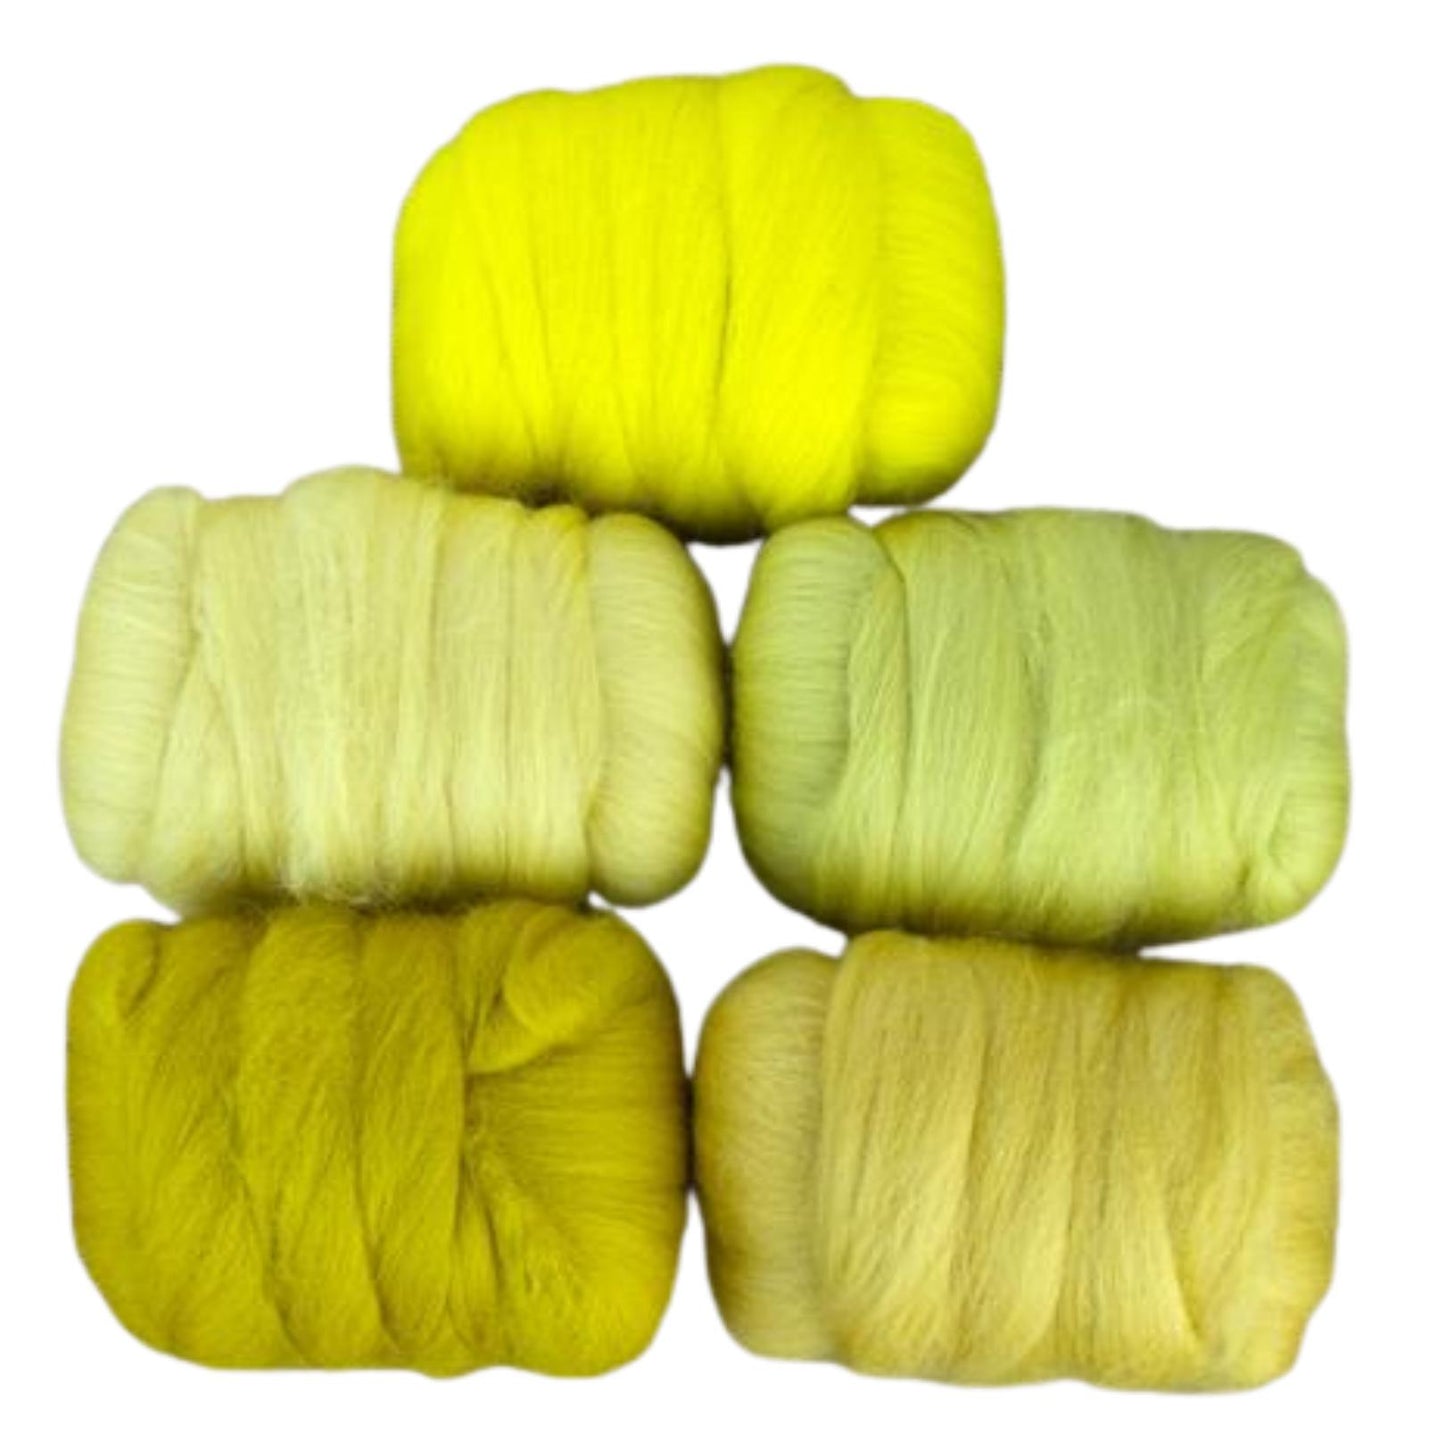 Mixed Merino Wool Variety Pack | Lemon Drop (Yellows) 250 Grams, 23 Micron